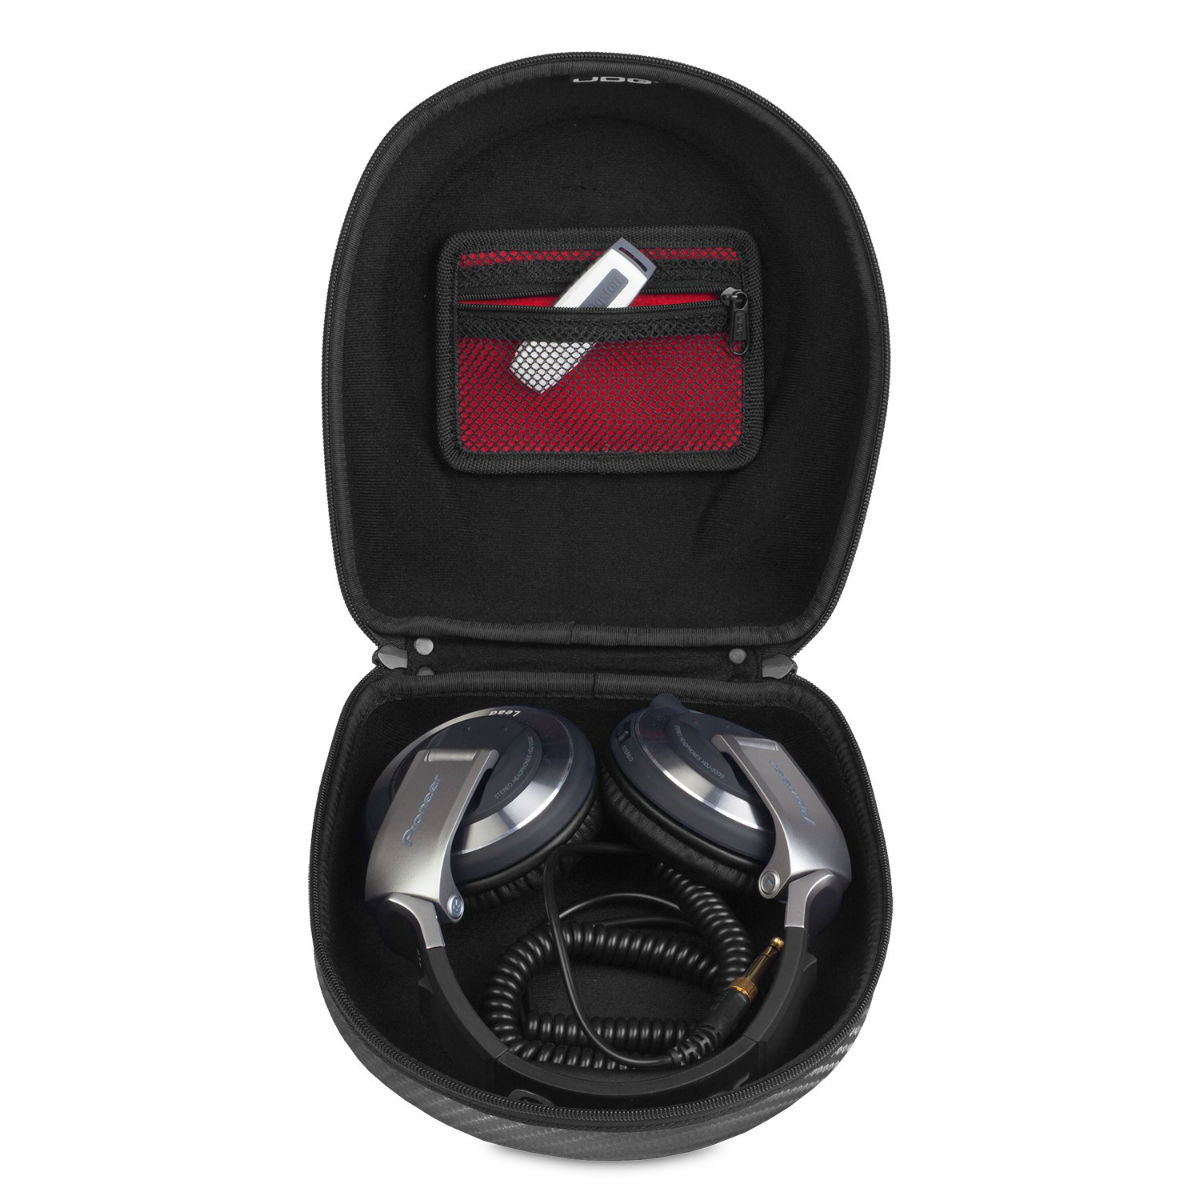 UDG Creator Headphone Case Large Silver PU U8202SL